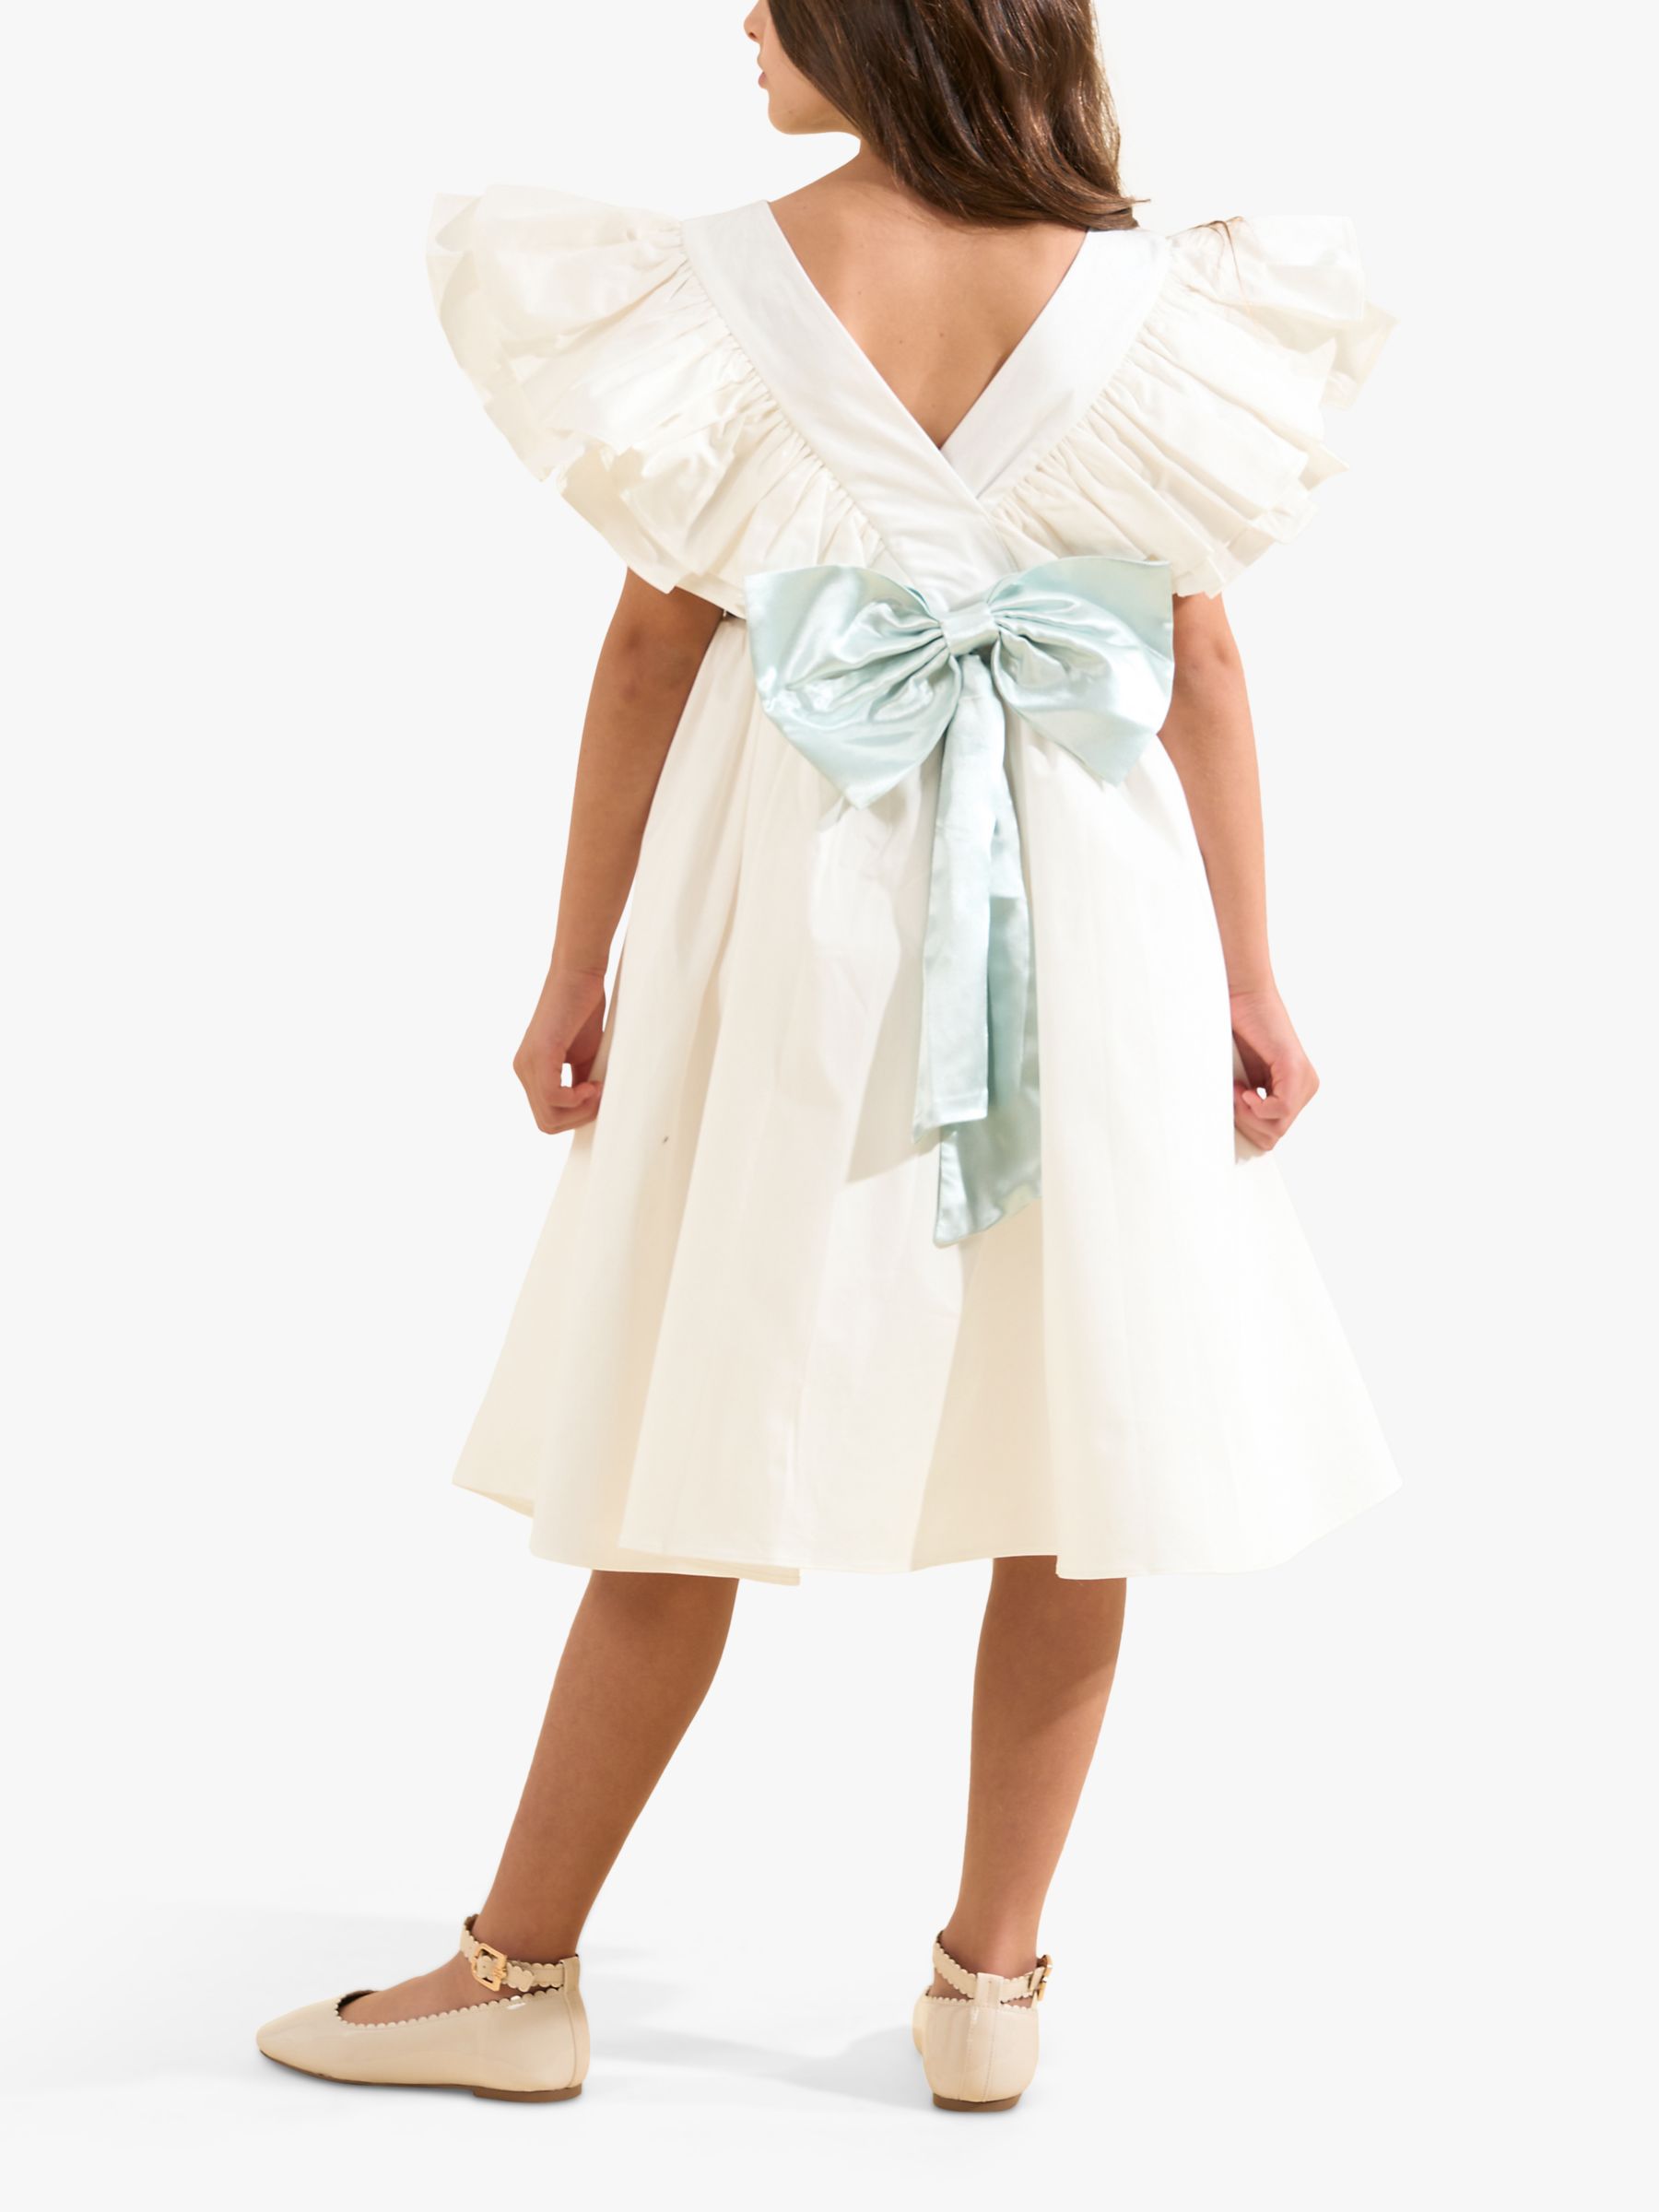 Angel & Rocket Kids' Sylvie Taffeta Sash Dress, White/Blue, 6 years